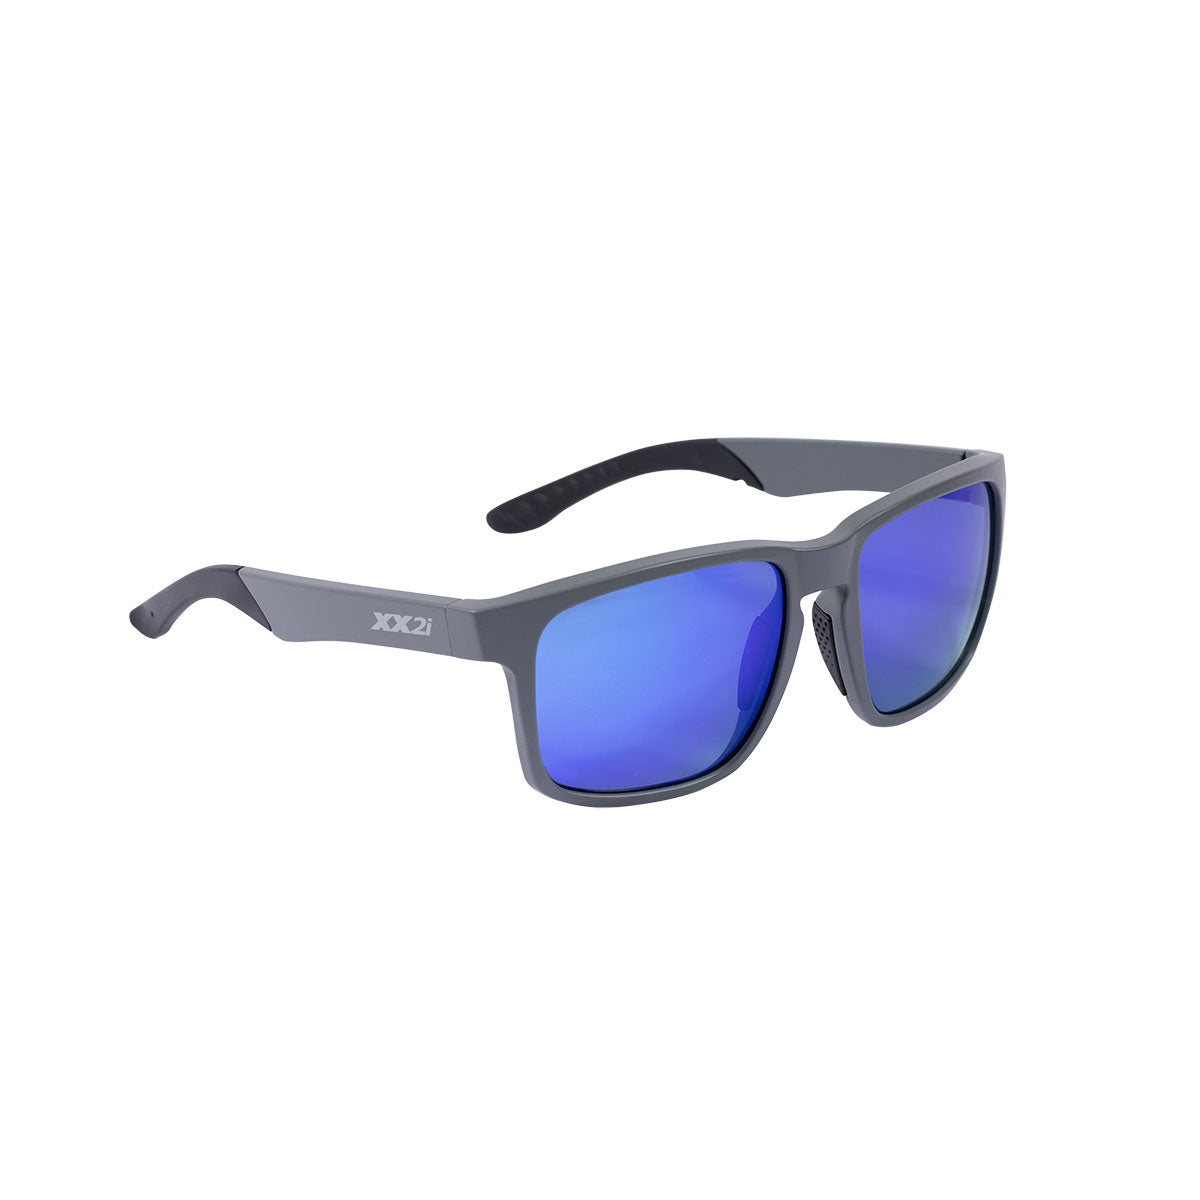 Key West R1 Lifestyle Sunglasses by XX2i Optics